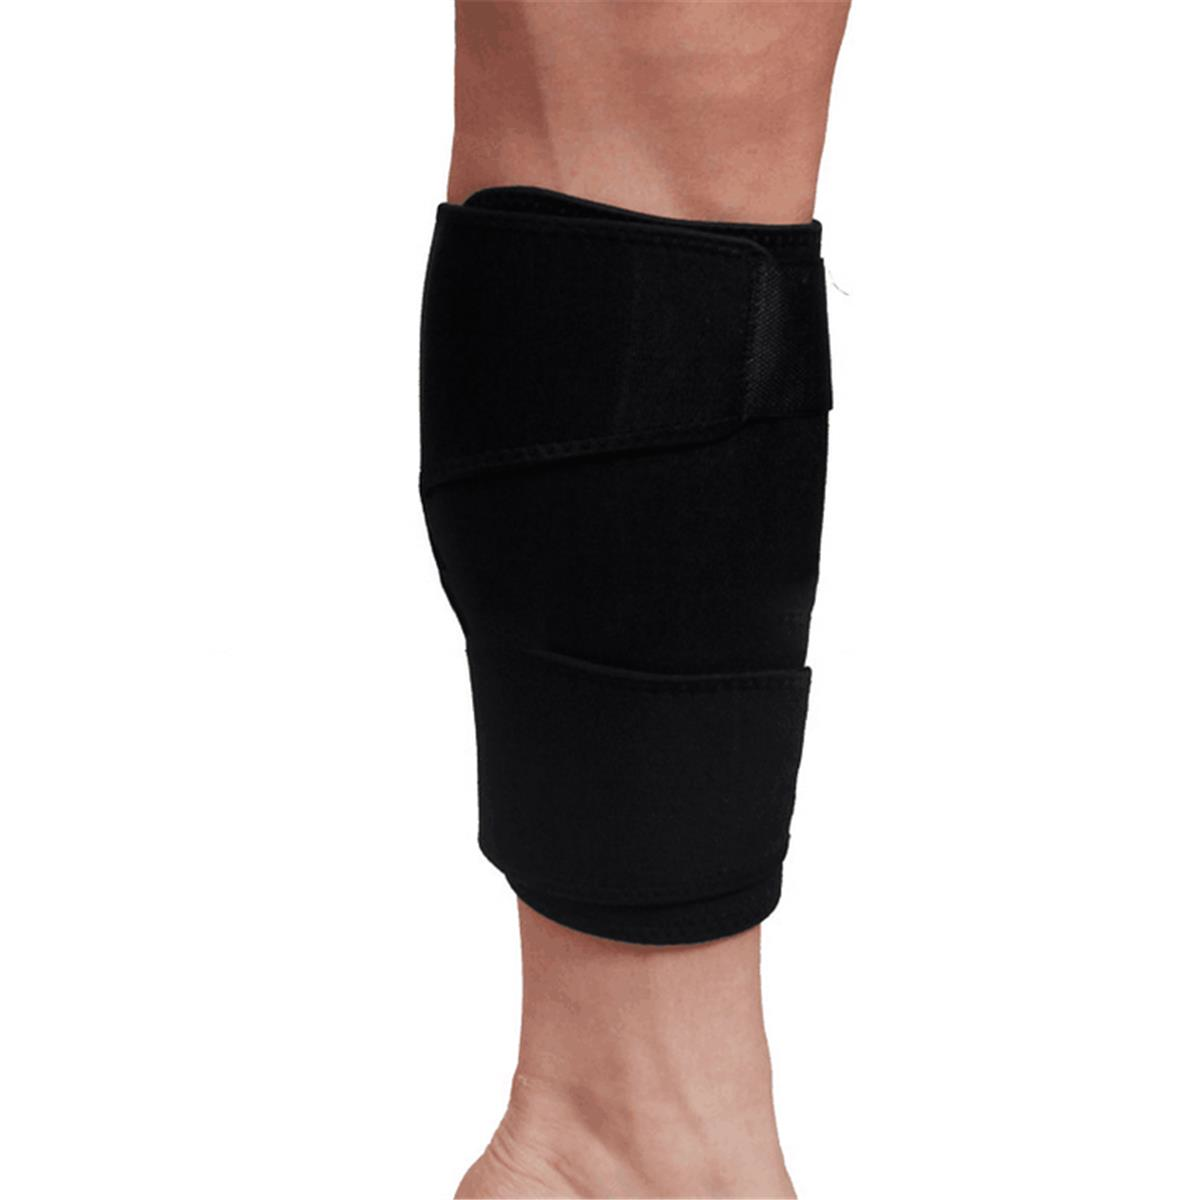 Sports Adjustable Foot Support Neoprene Calf Shin Support Wrap Brace Splint Band Sleeve Injury Guard